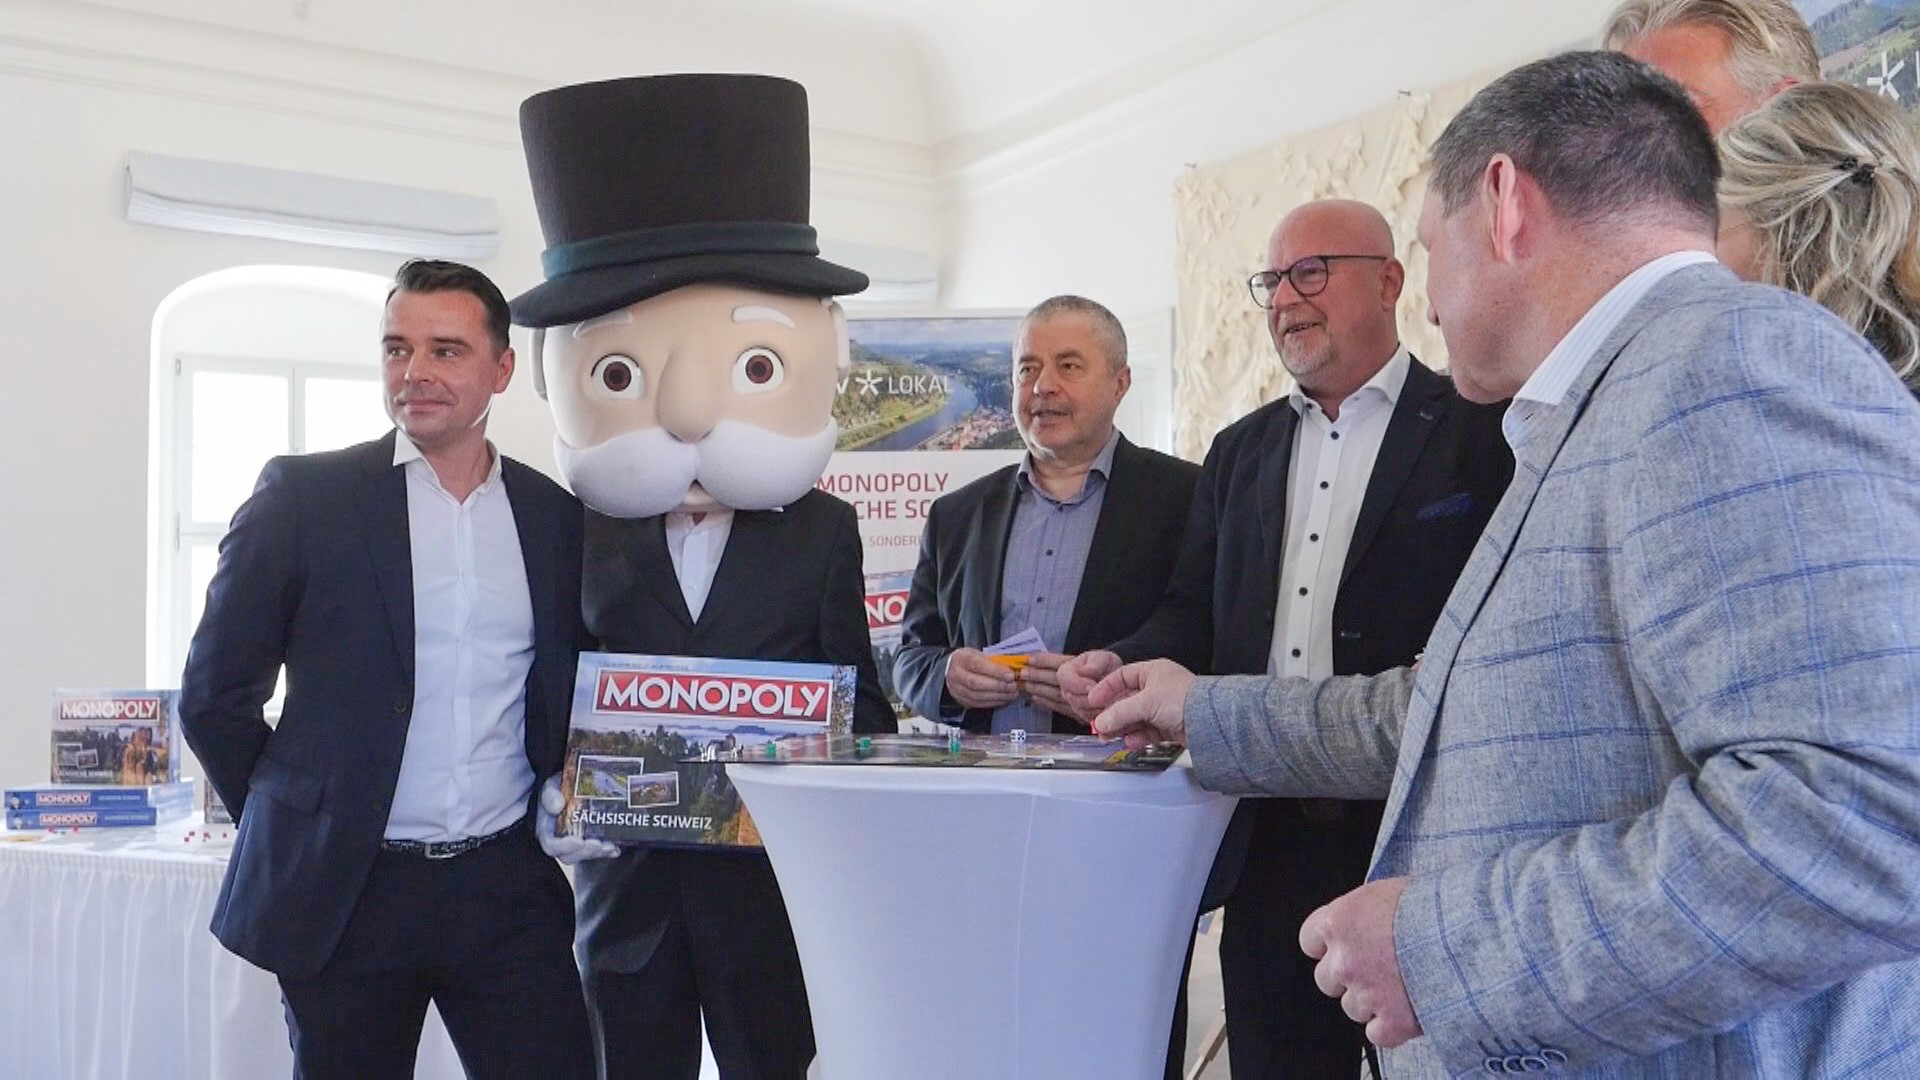 Spieleklassiker Monopoly erobert die Sächsische Schweiz